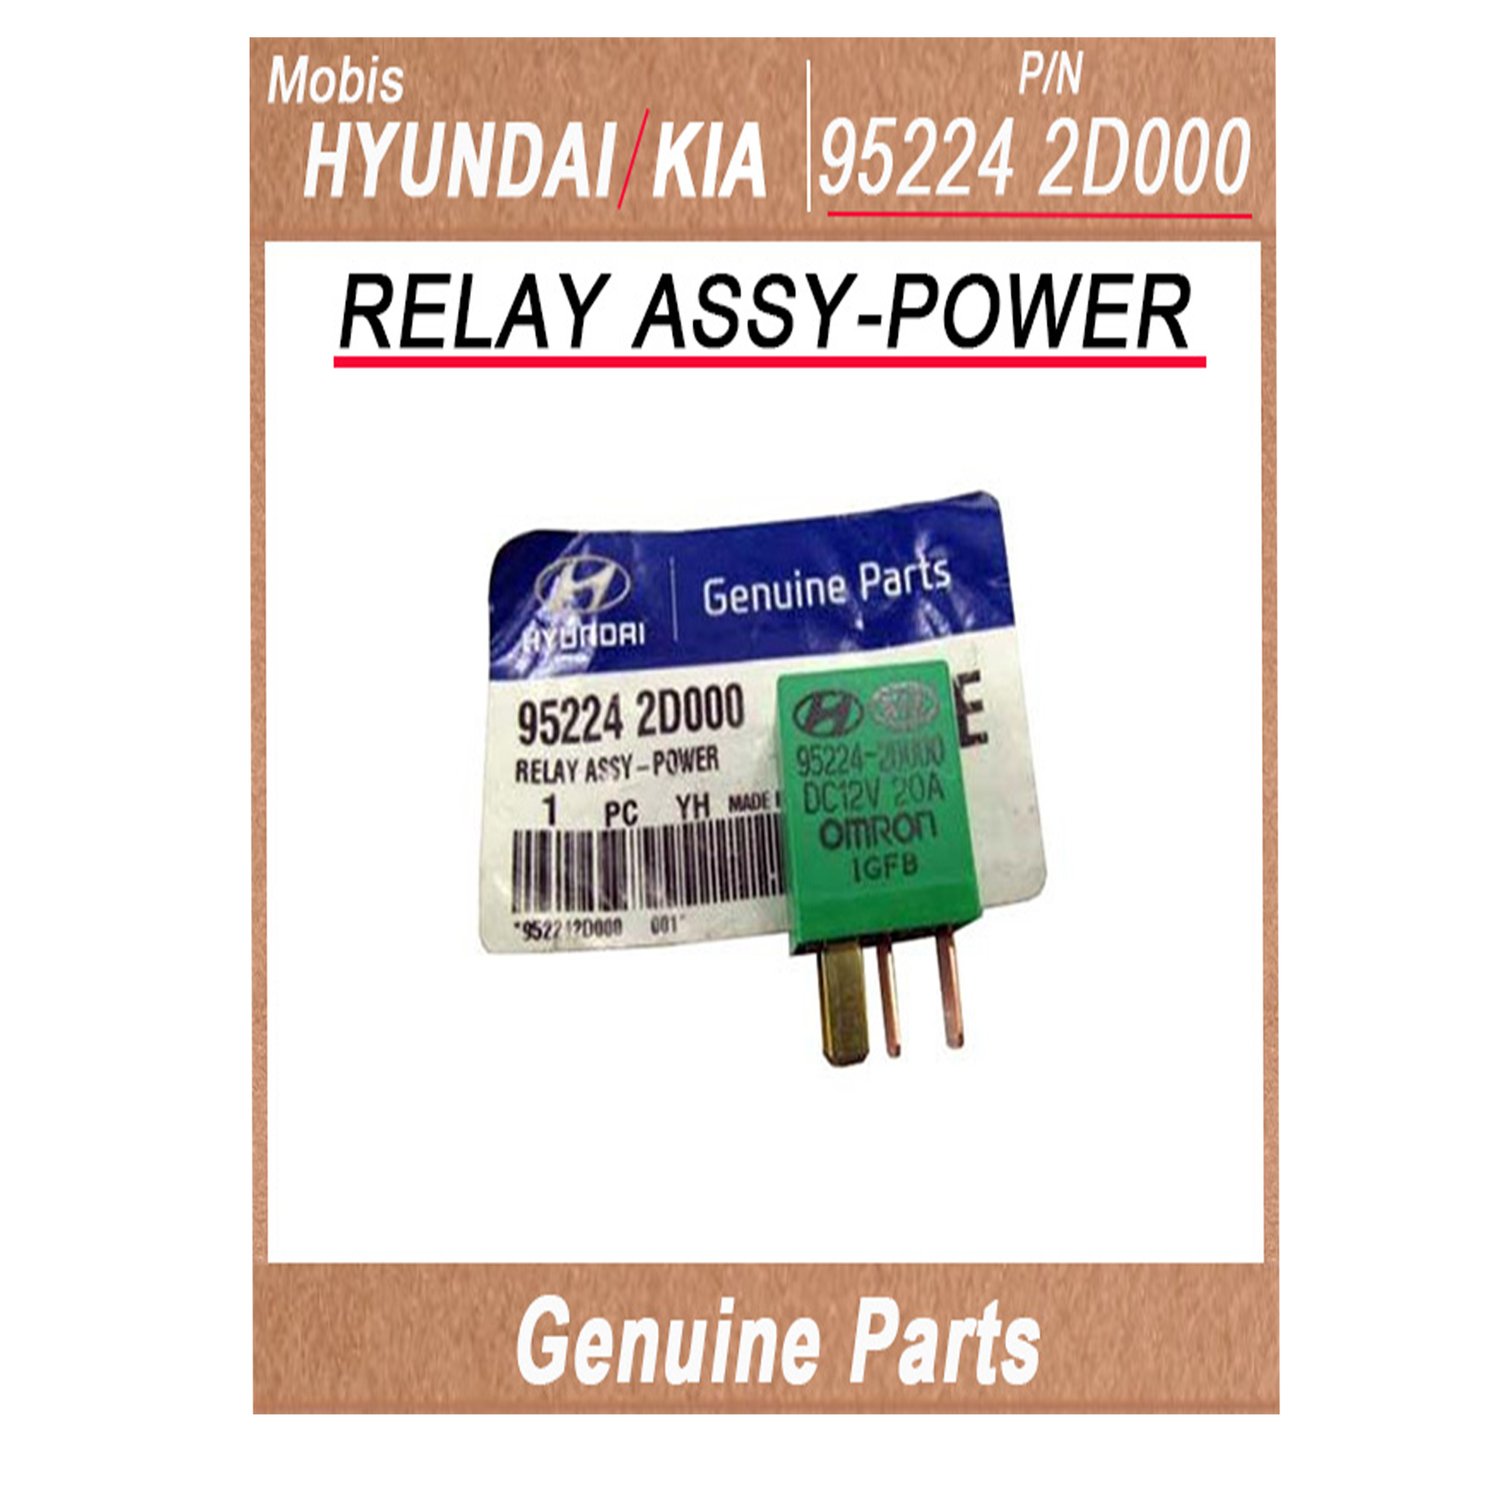 952242D000 _ RELAY ASSY_POWER _ Genuine Korean Automotive Spare Parts _ Hyundai Kia _Mobis_